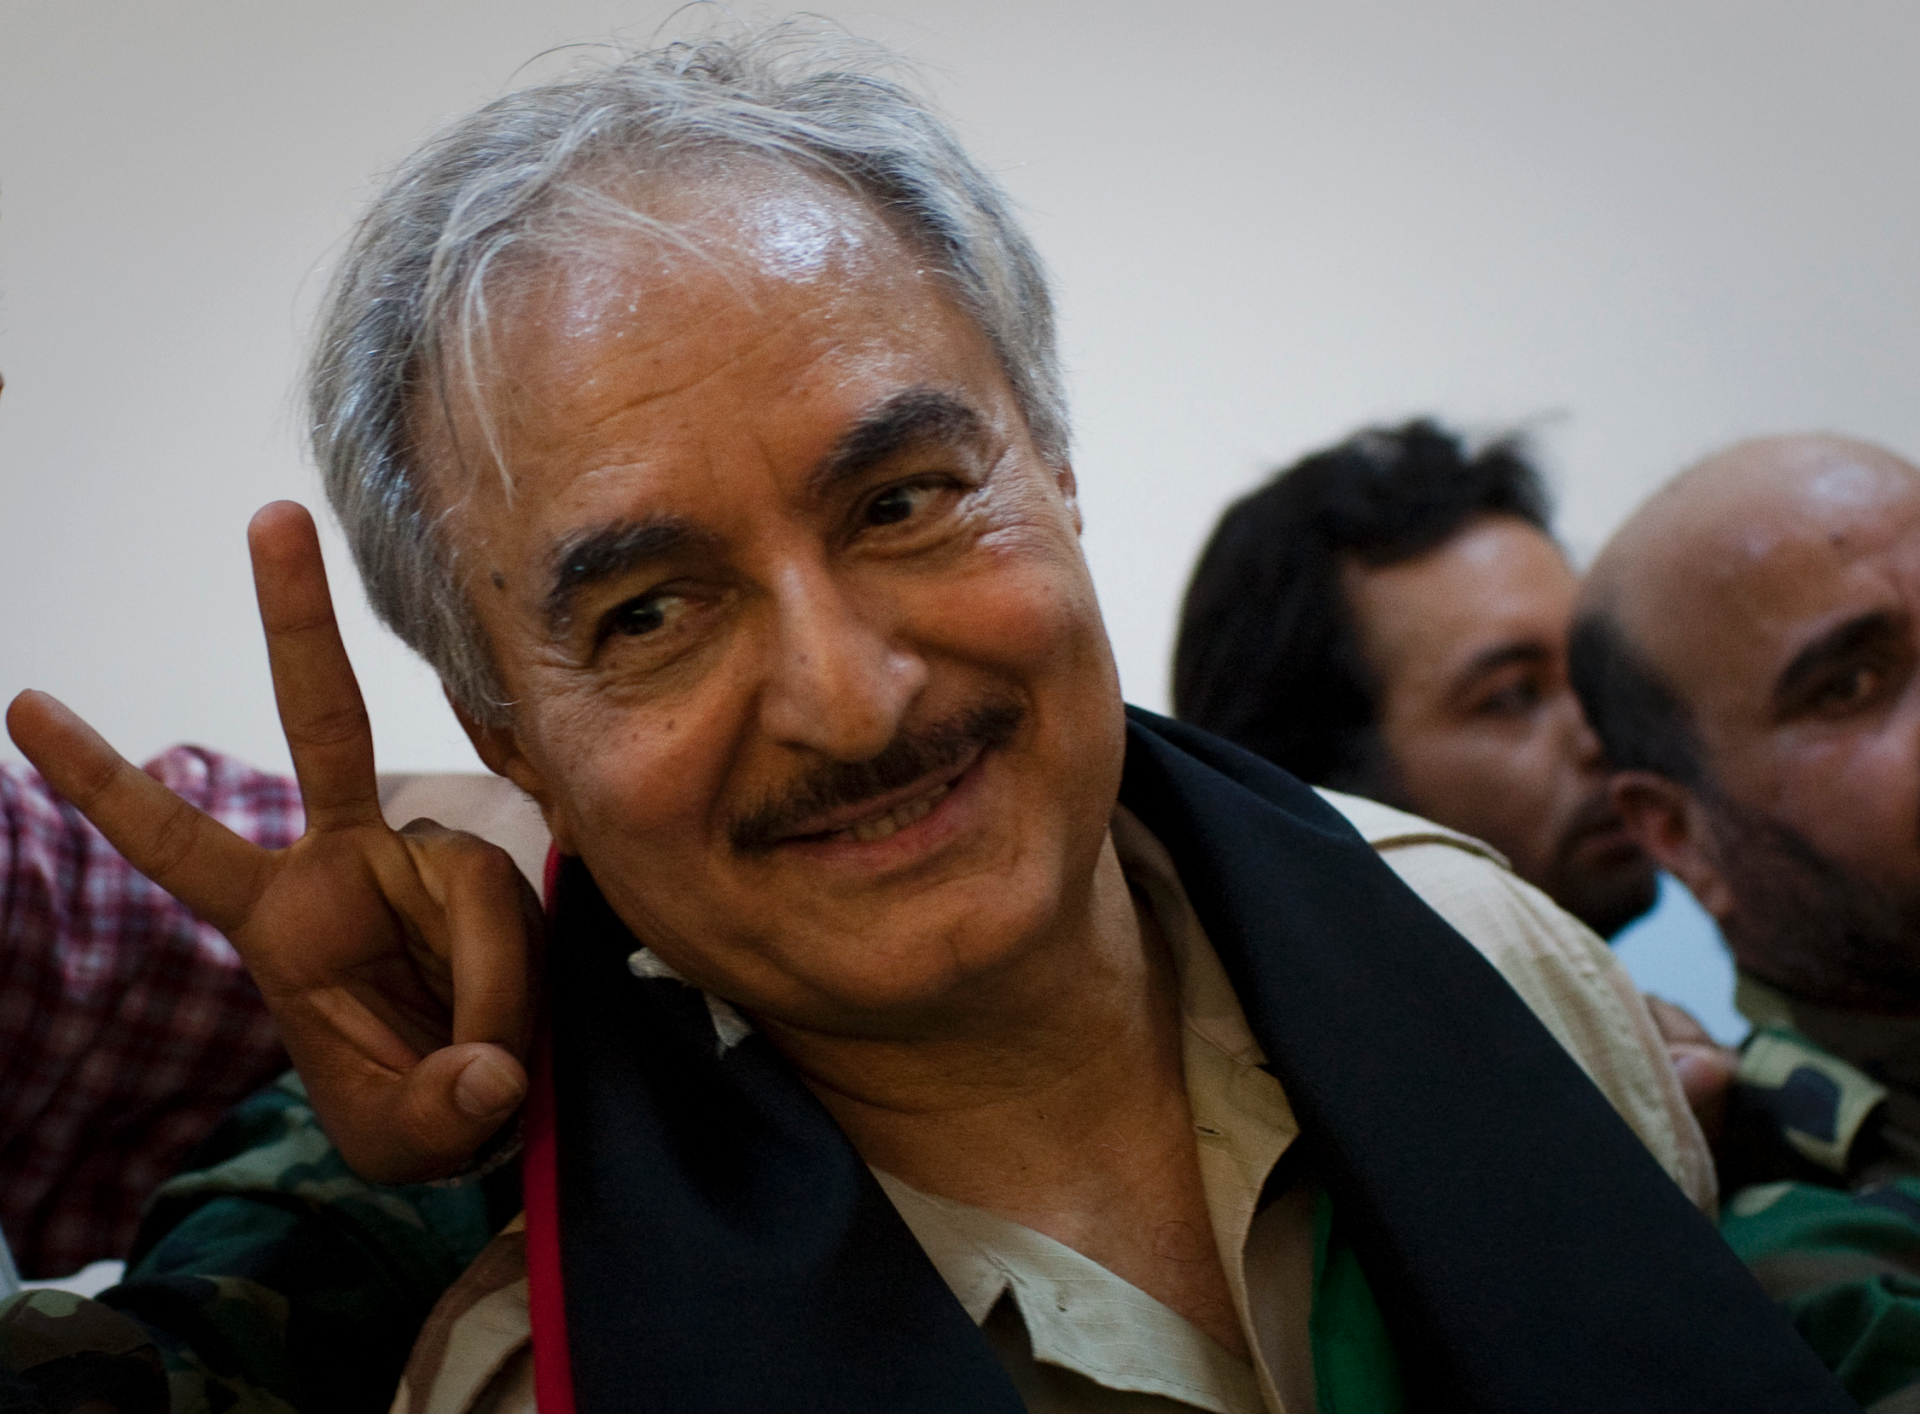 Libya speaker: No deals while armed groups 'kidnap' Tripoli